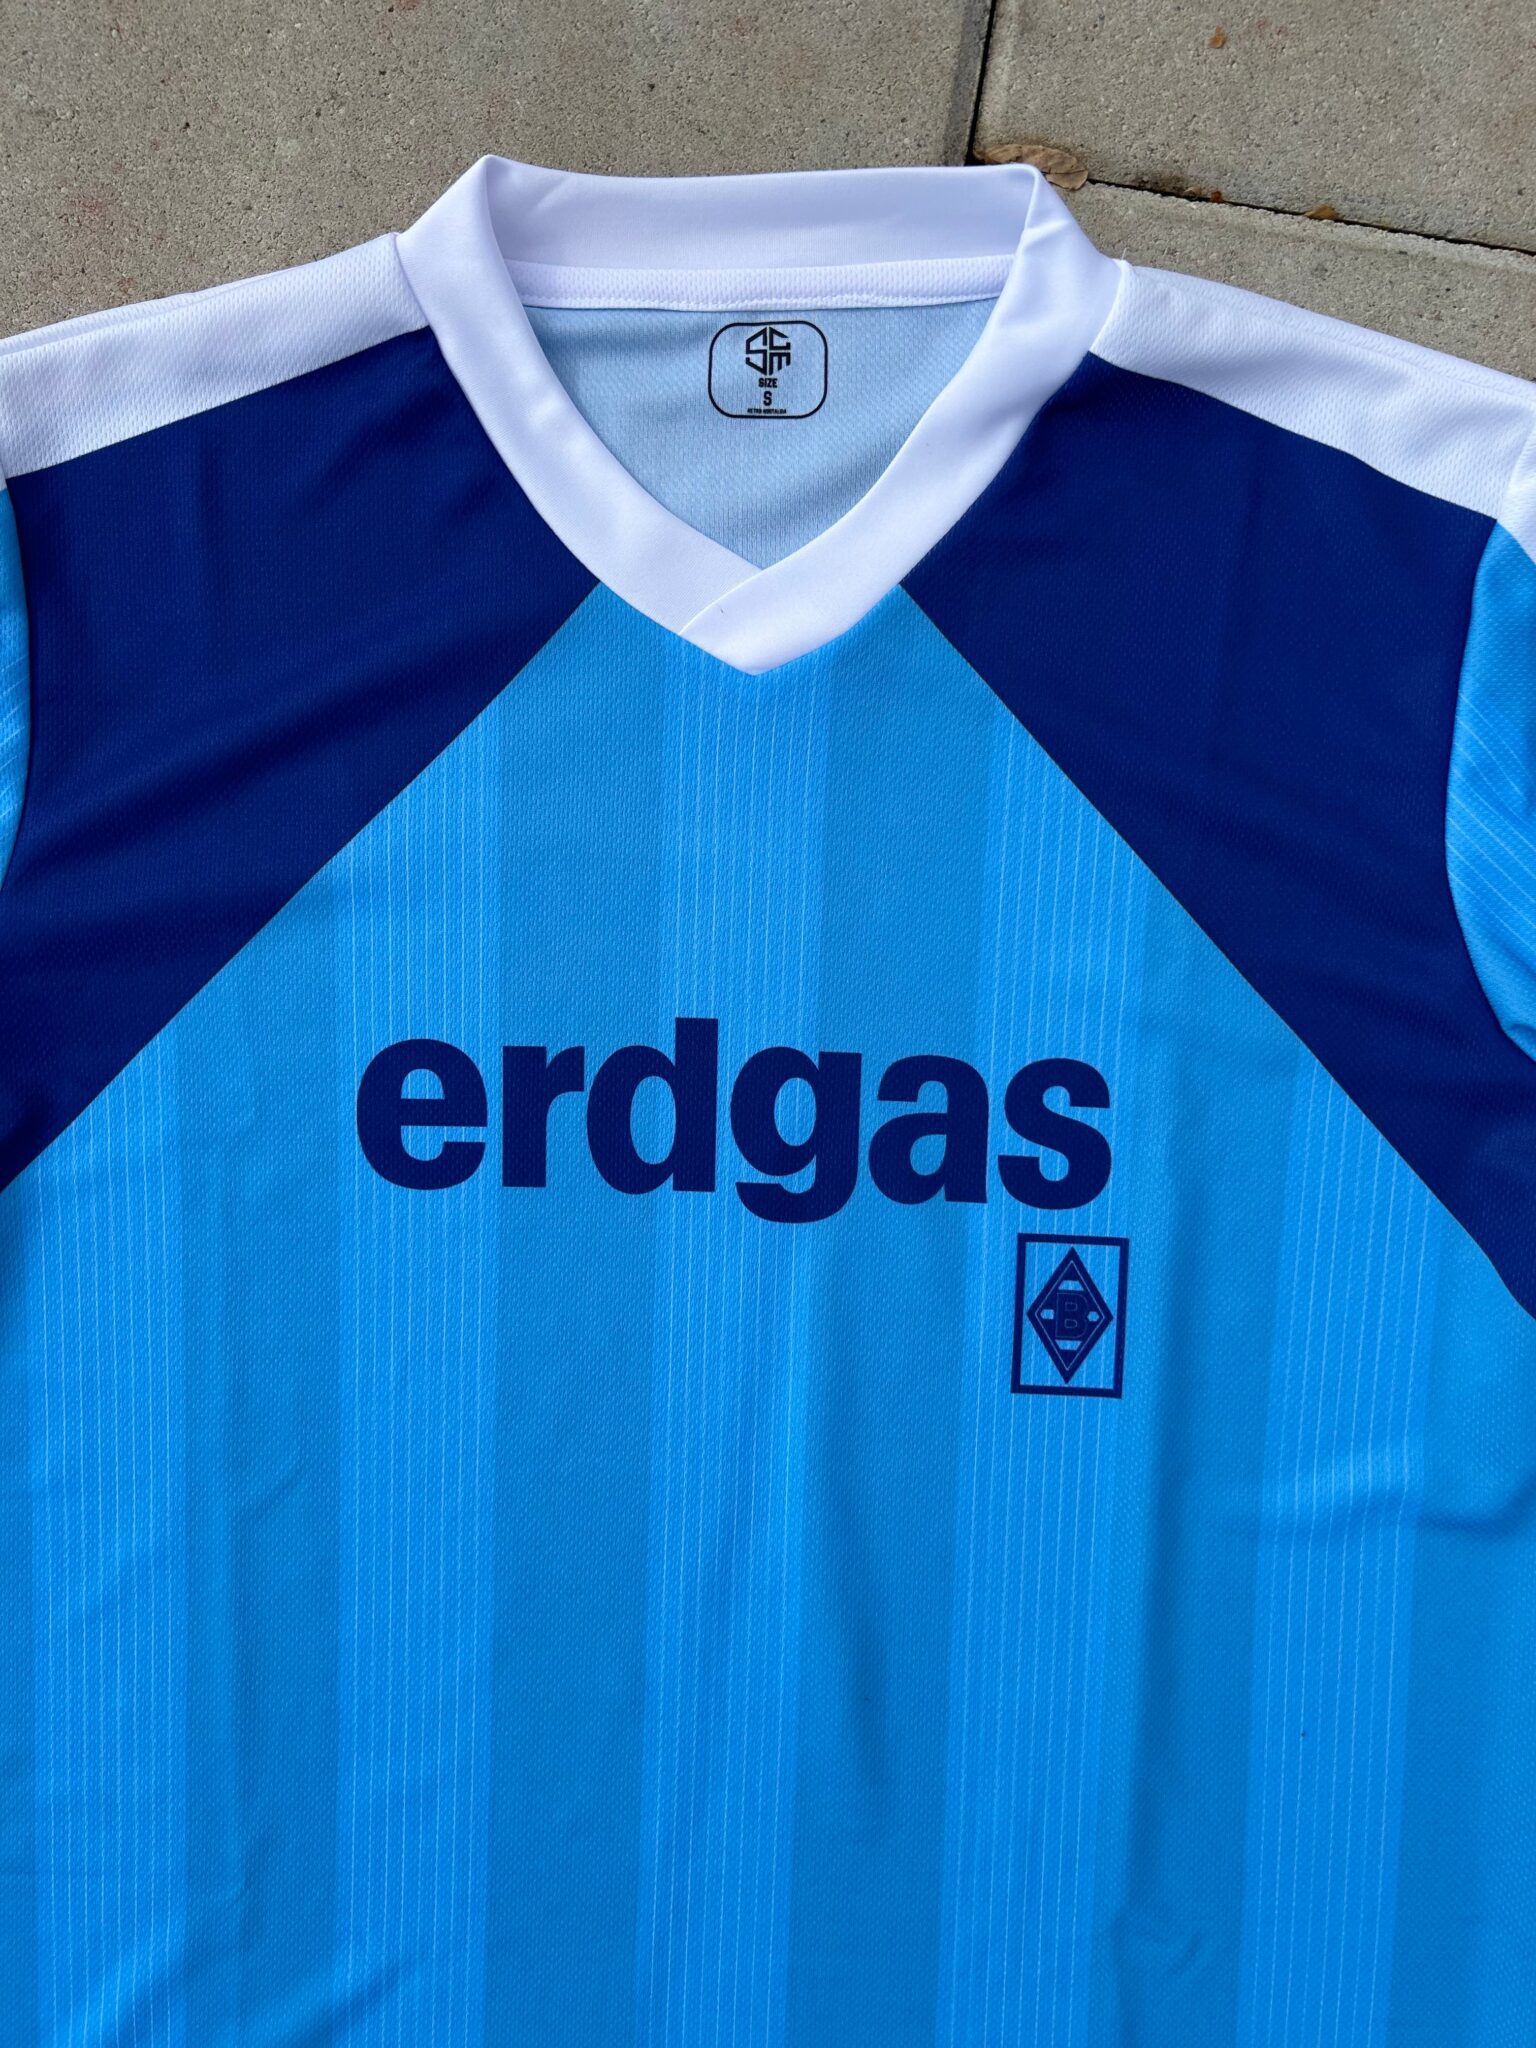 Borussia Mönchengladbach Retro Trikot "Ergdas" 1988/1989 Effenberg #10 Jersey Vintage Shirt - Sport Club Memories